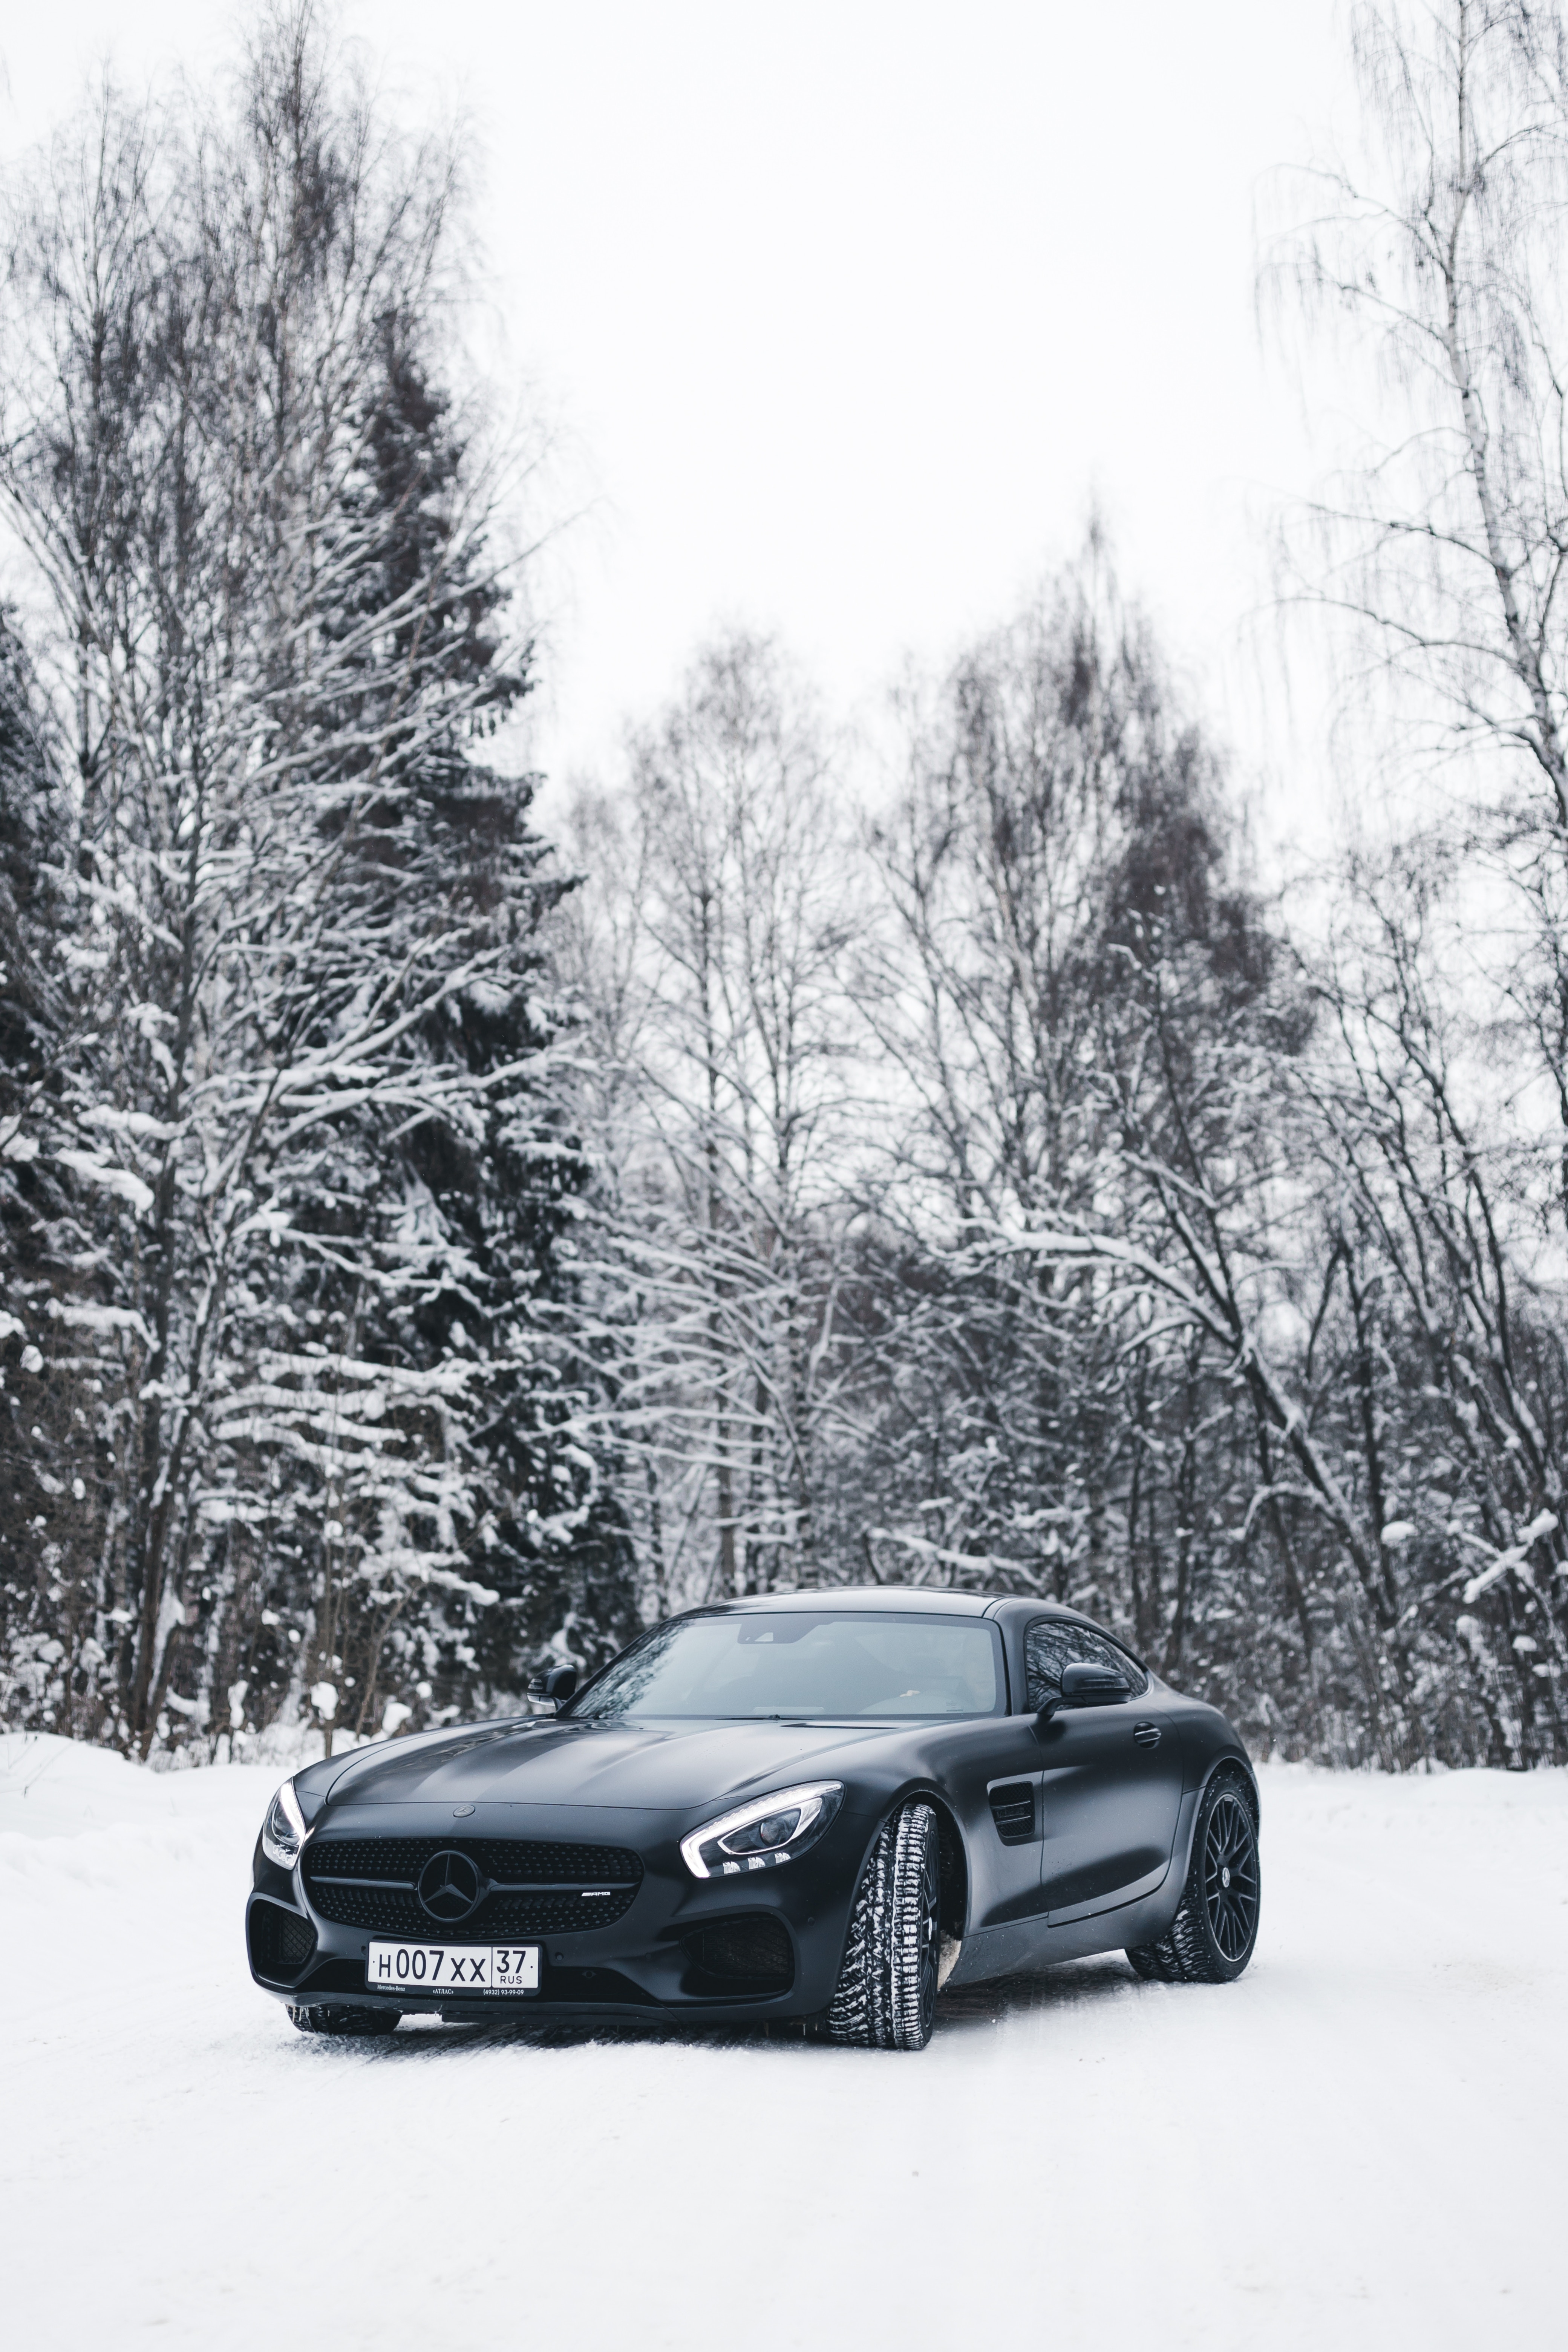 cars, mercedes-benz, forest, snow, black, mercedes Full HD